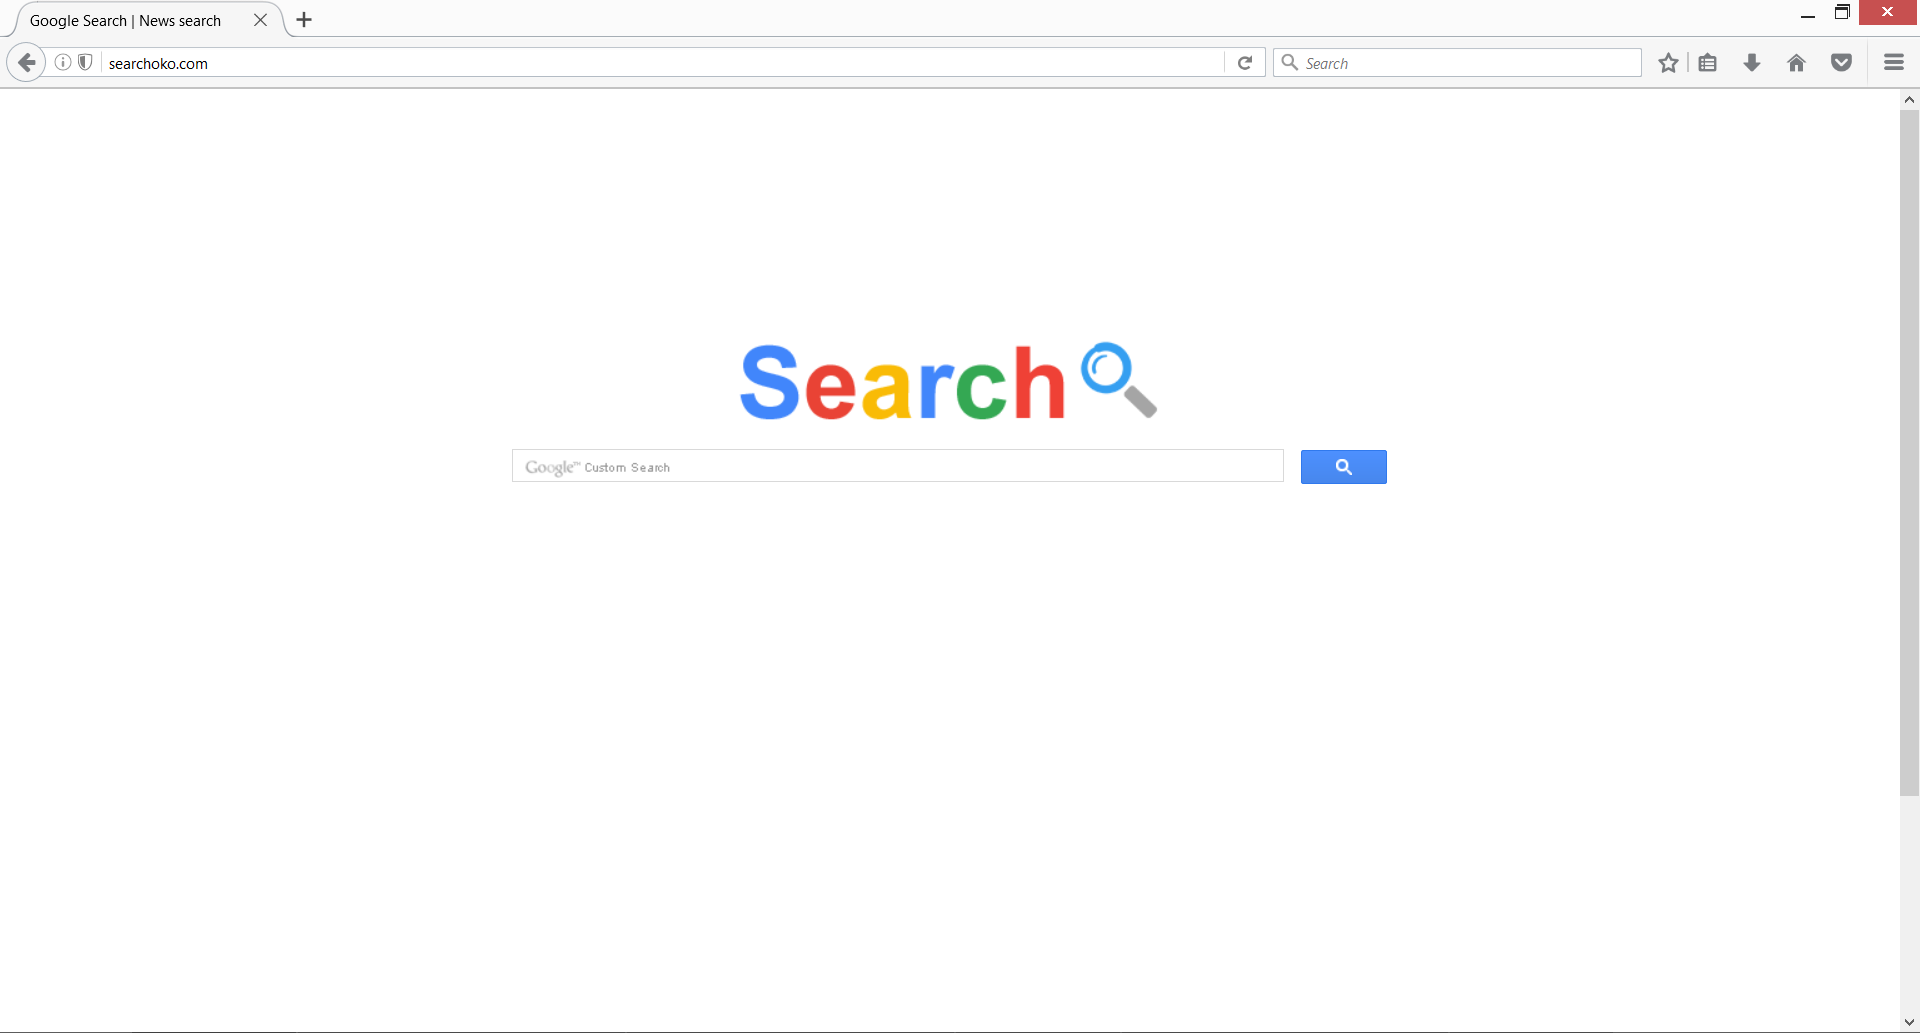 searchoko-com-browser-hijacker-browser-redirect